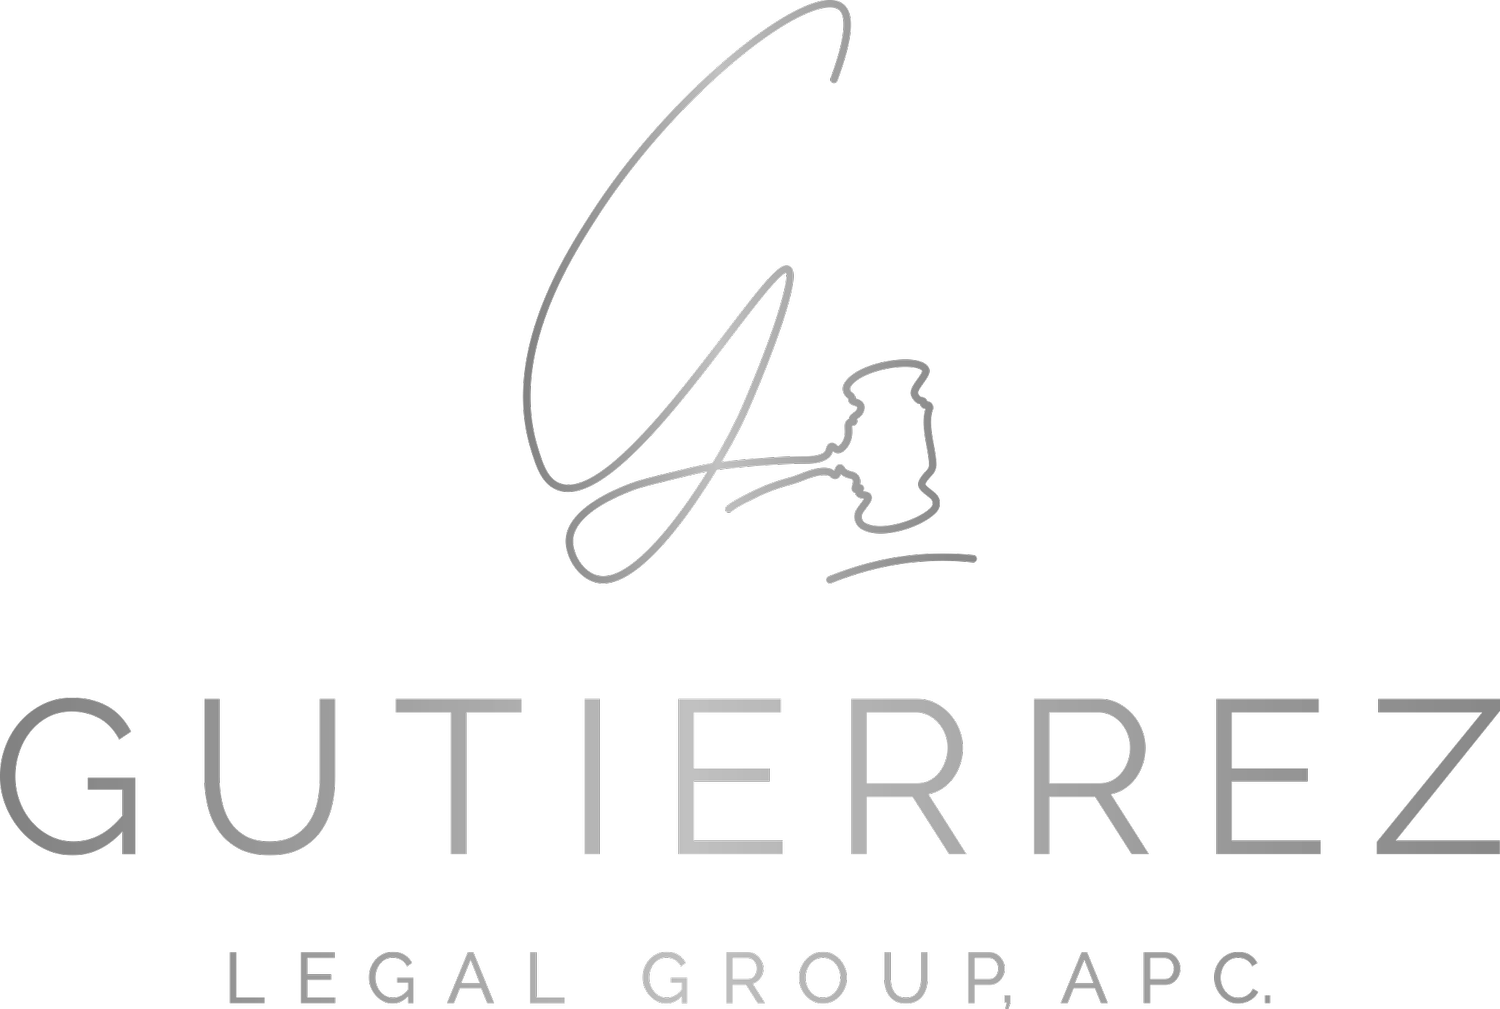 Gutierrez Legal Group